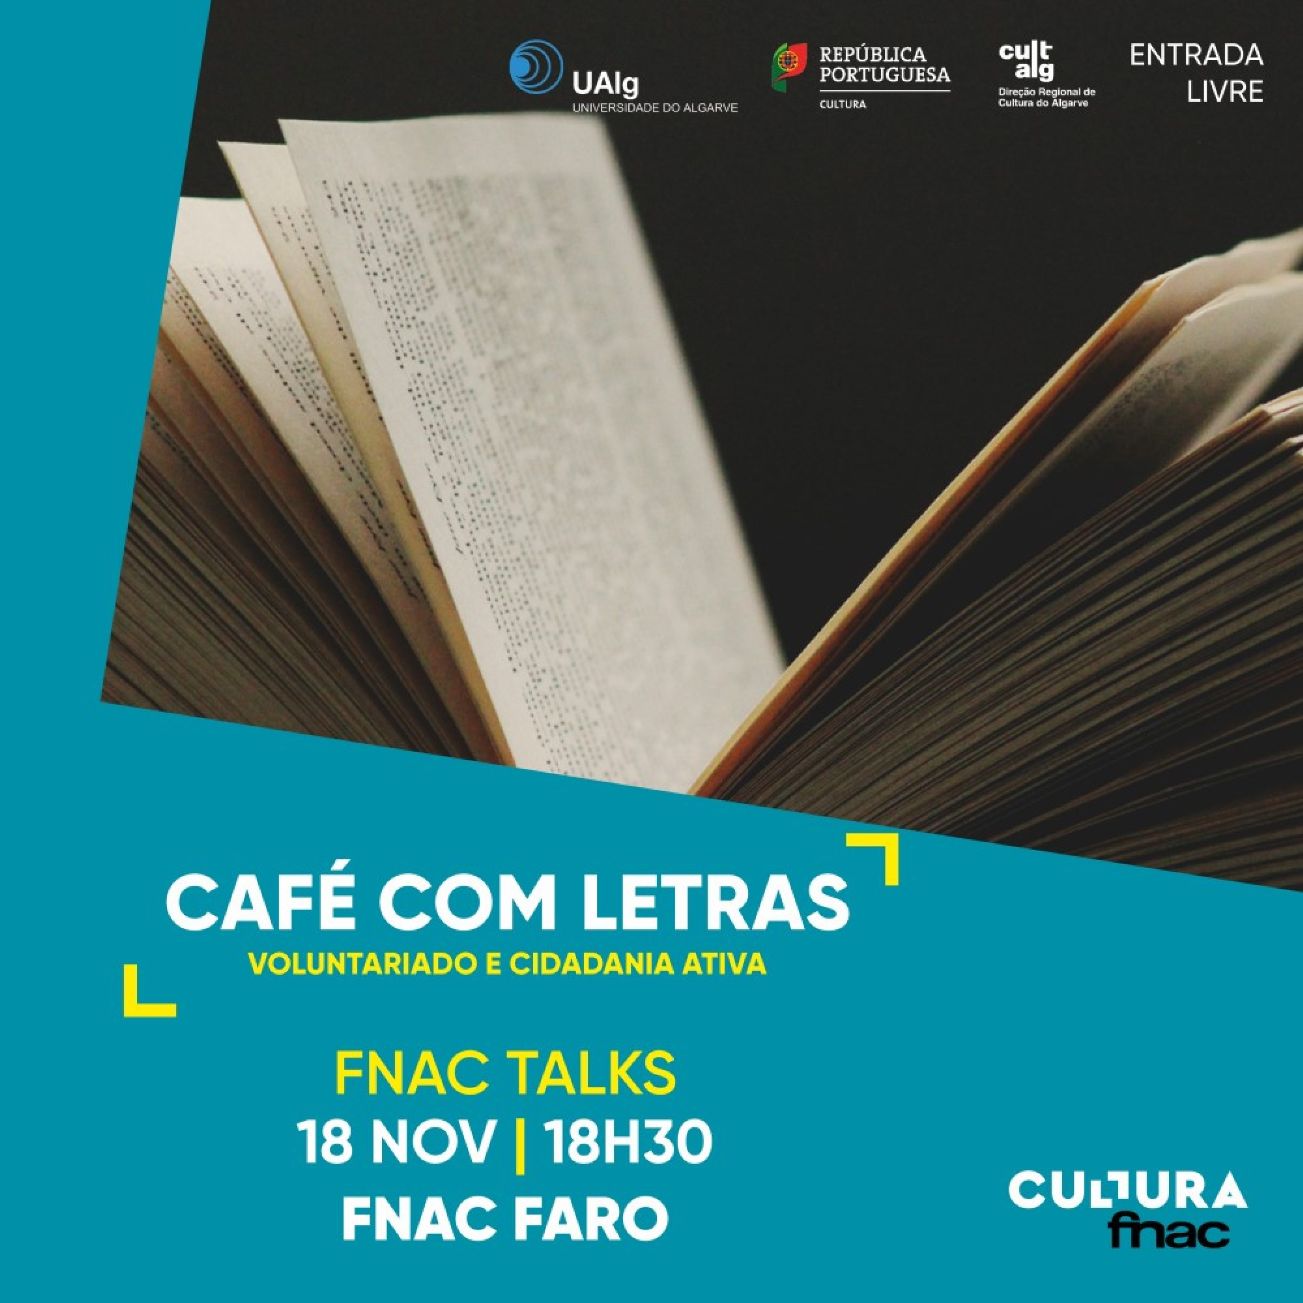 Ciclo de conversas - Café com Letras na Fnac de Faro sobre voluntariado e cidadania activa